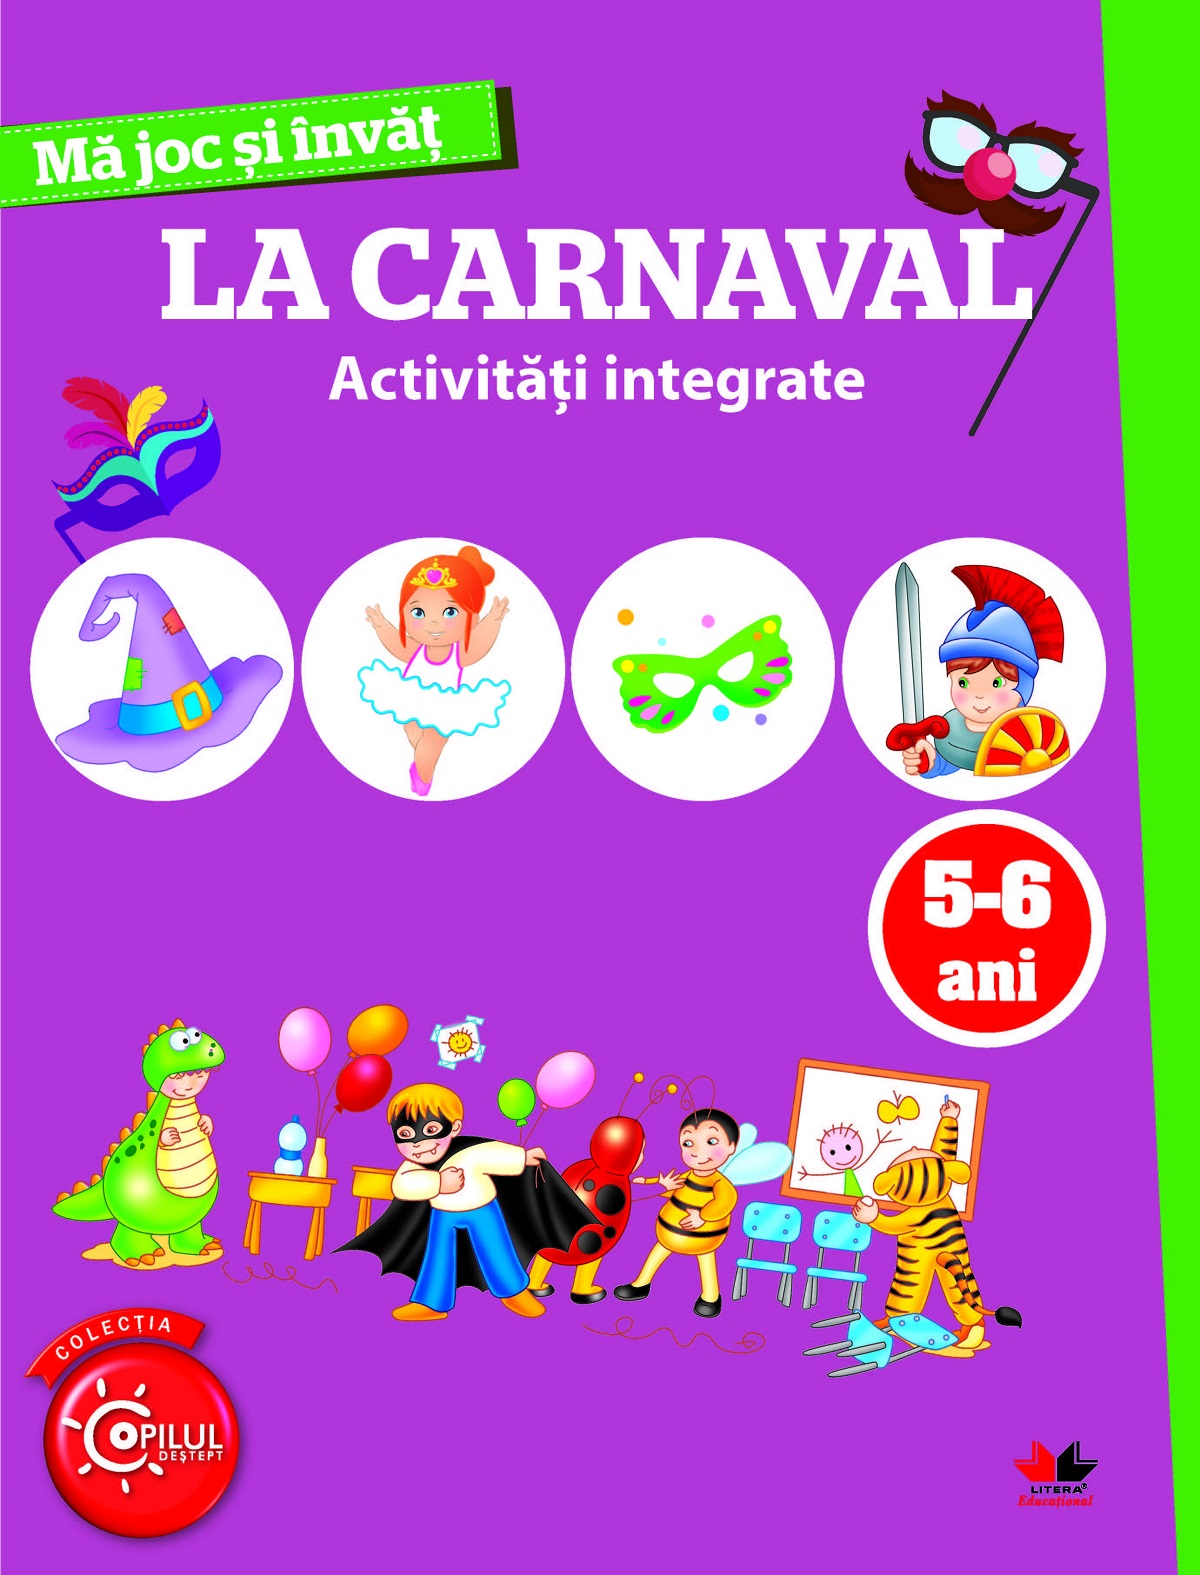 Ma joc si invat: La carnaval. Activitati integrate 5-6 ani